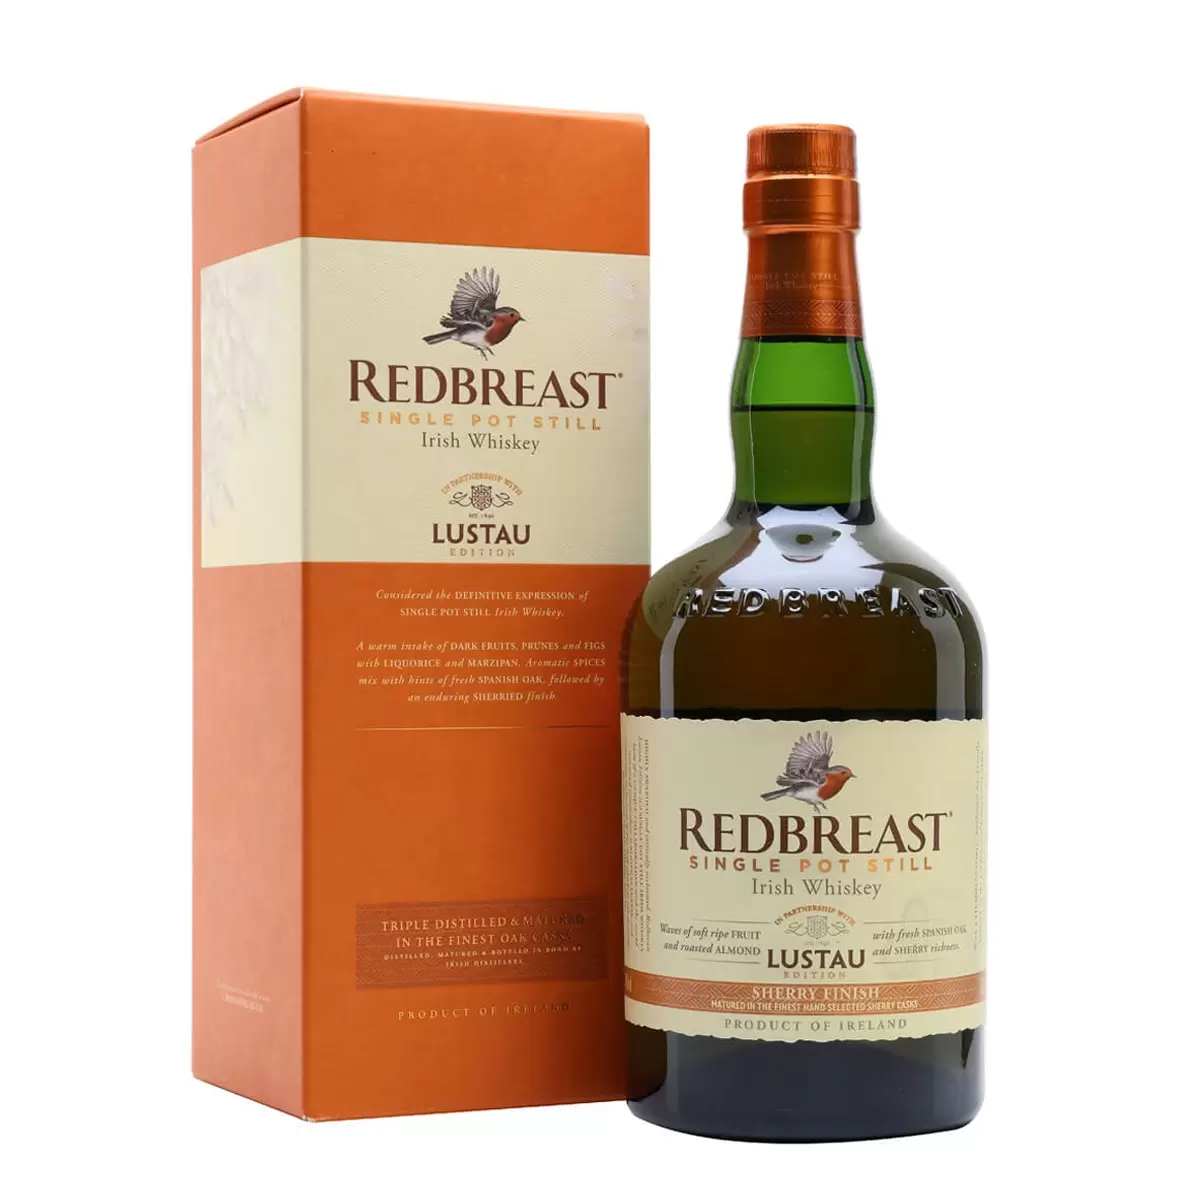 Redbreast Lustau Ed. Single Pot Still Irish Whiskey—70c | The Liquid Collection